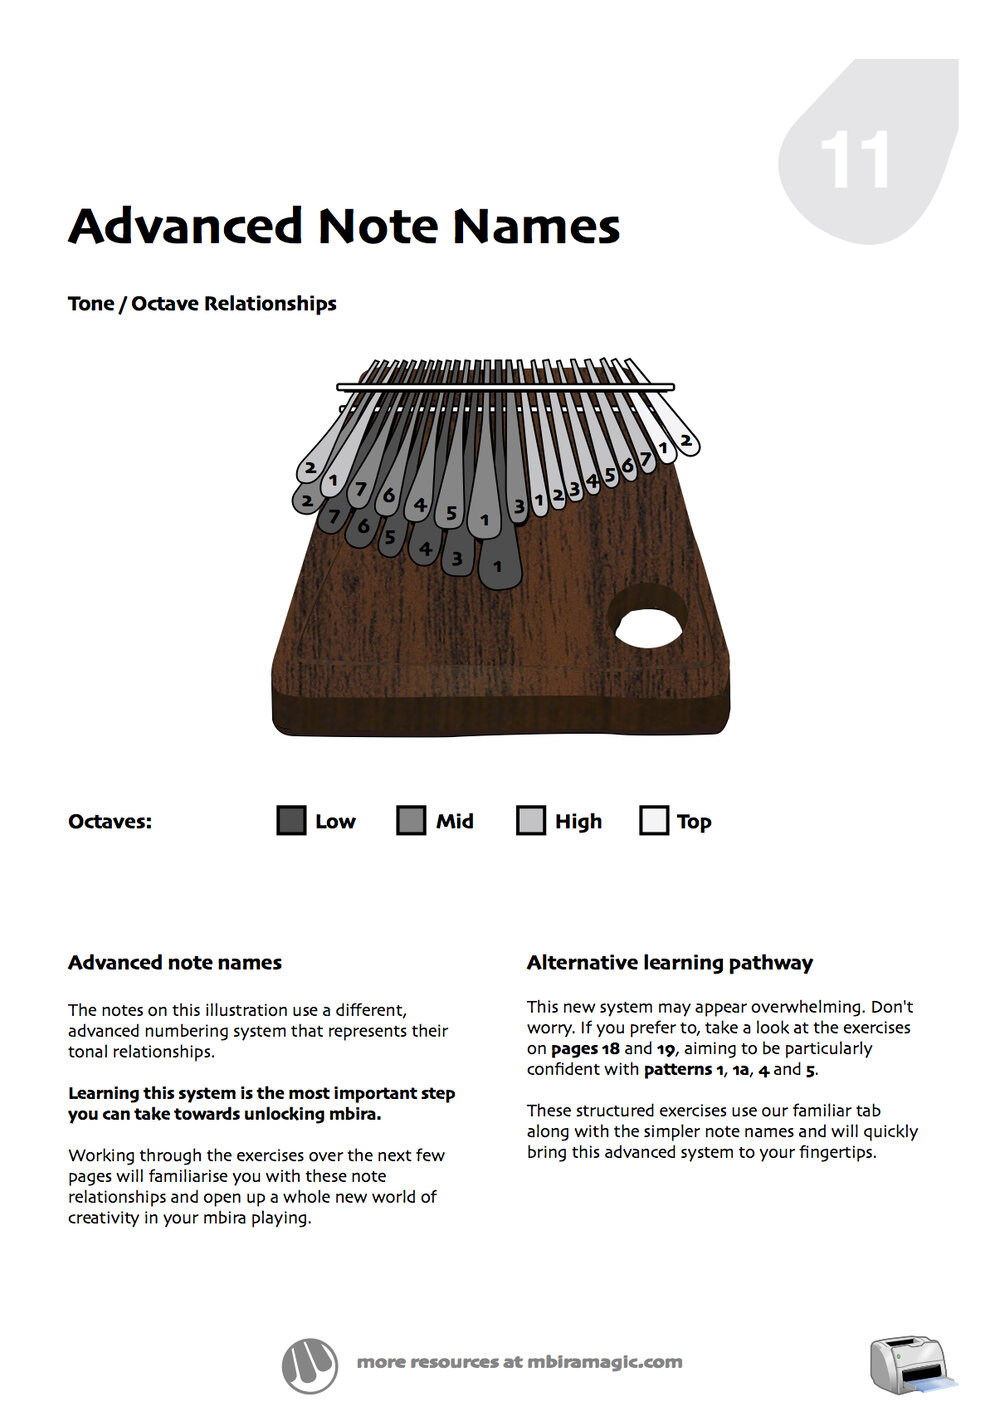 Unlocking Mbira - Advanced 'Pitch Notation' Notes.jpg